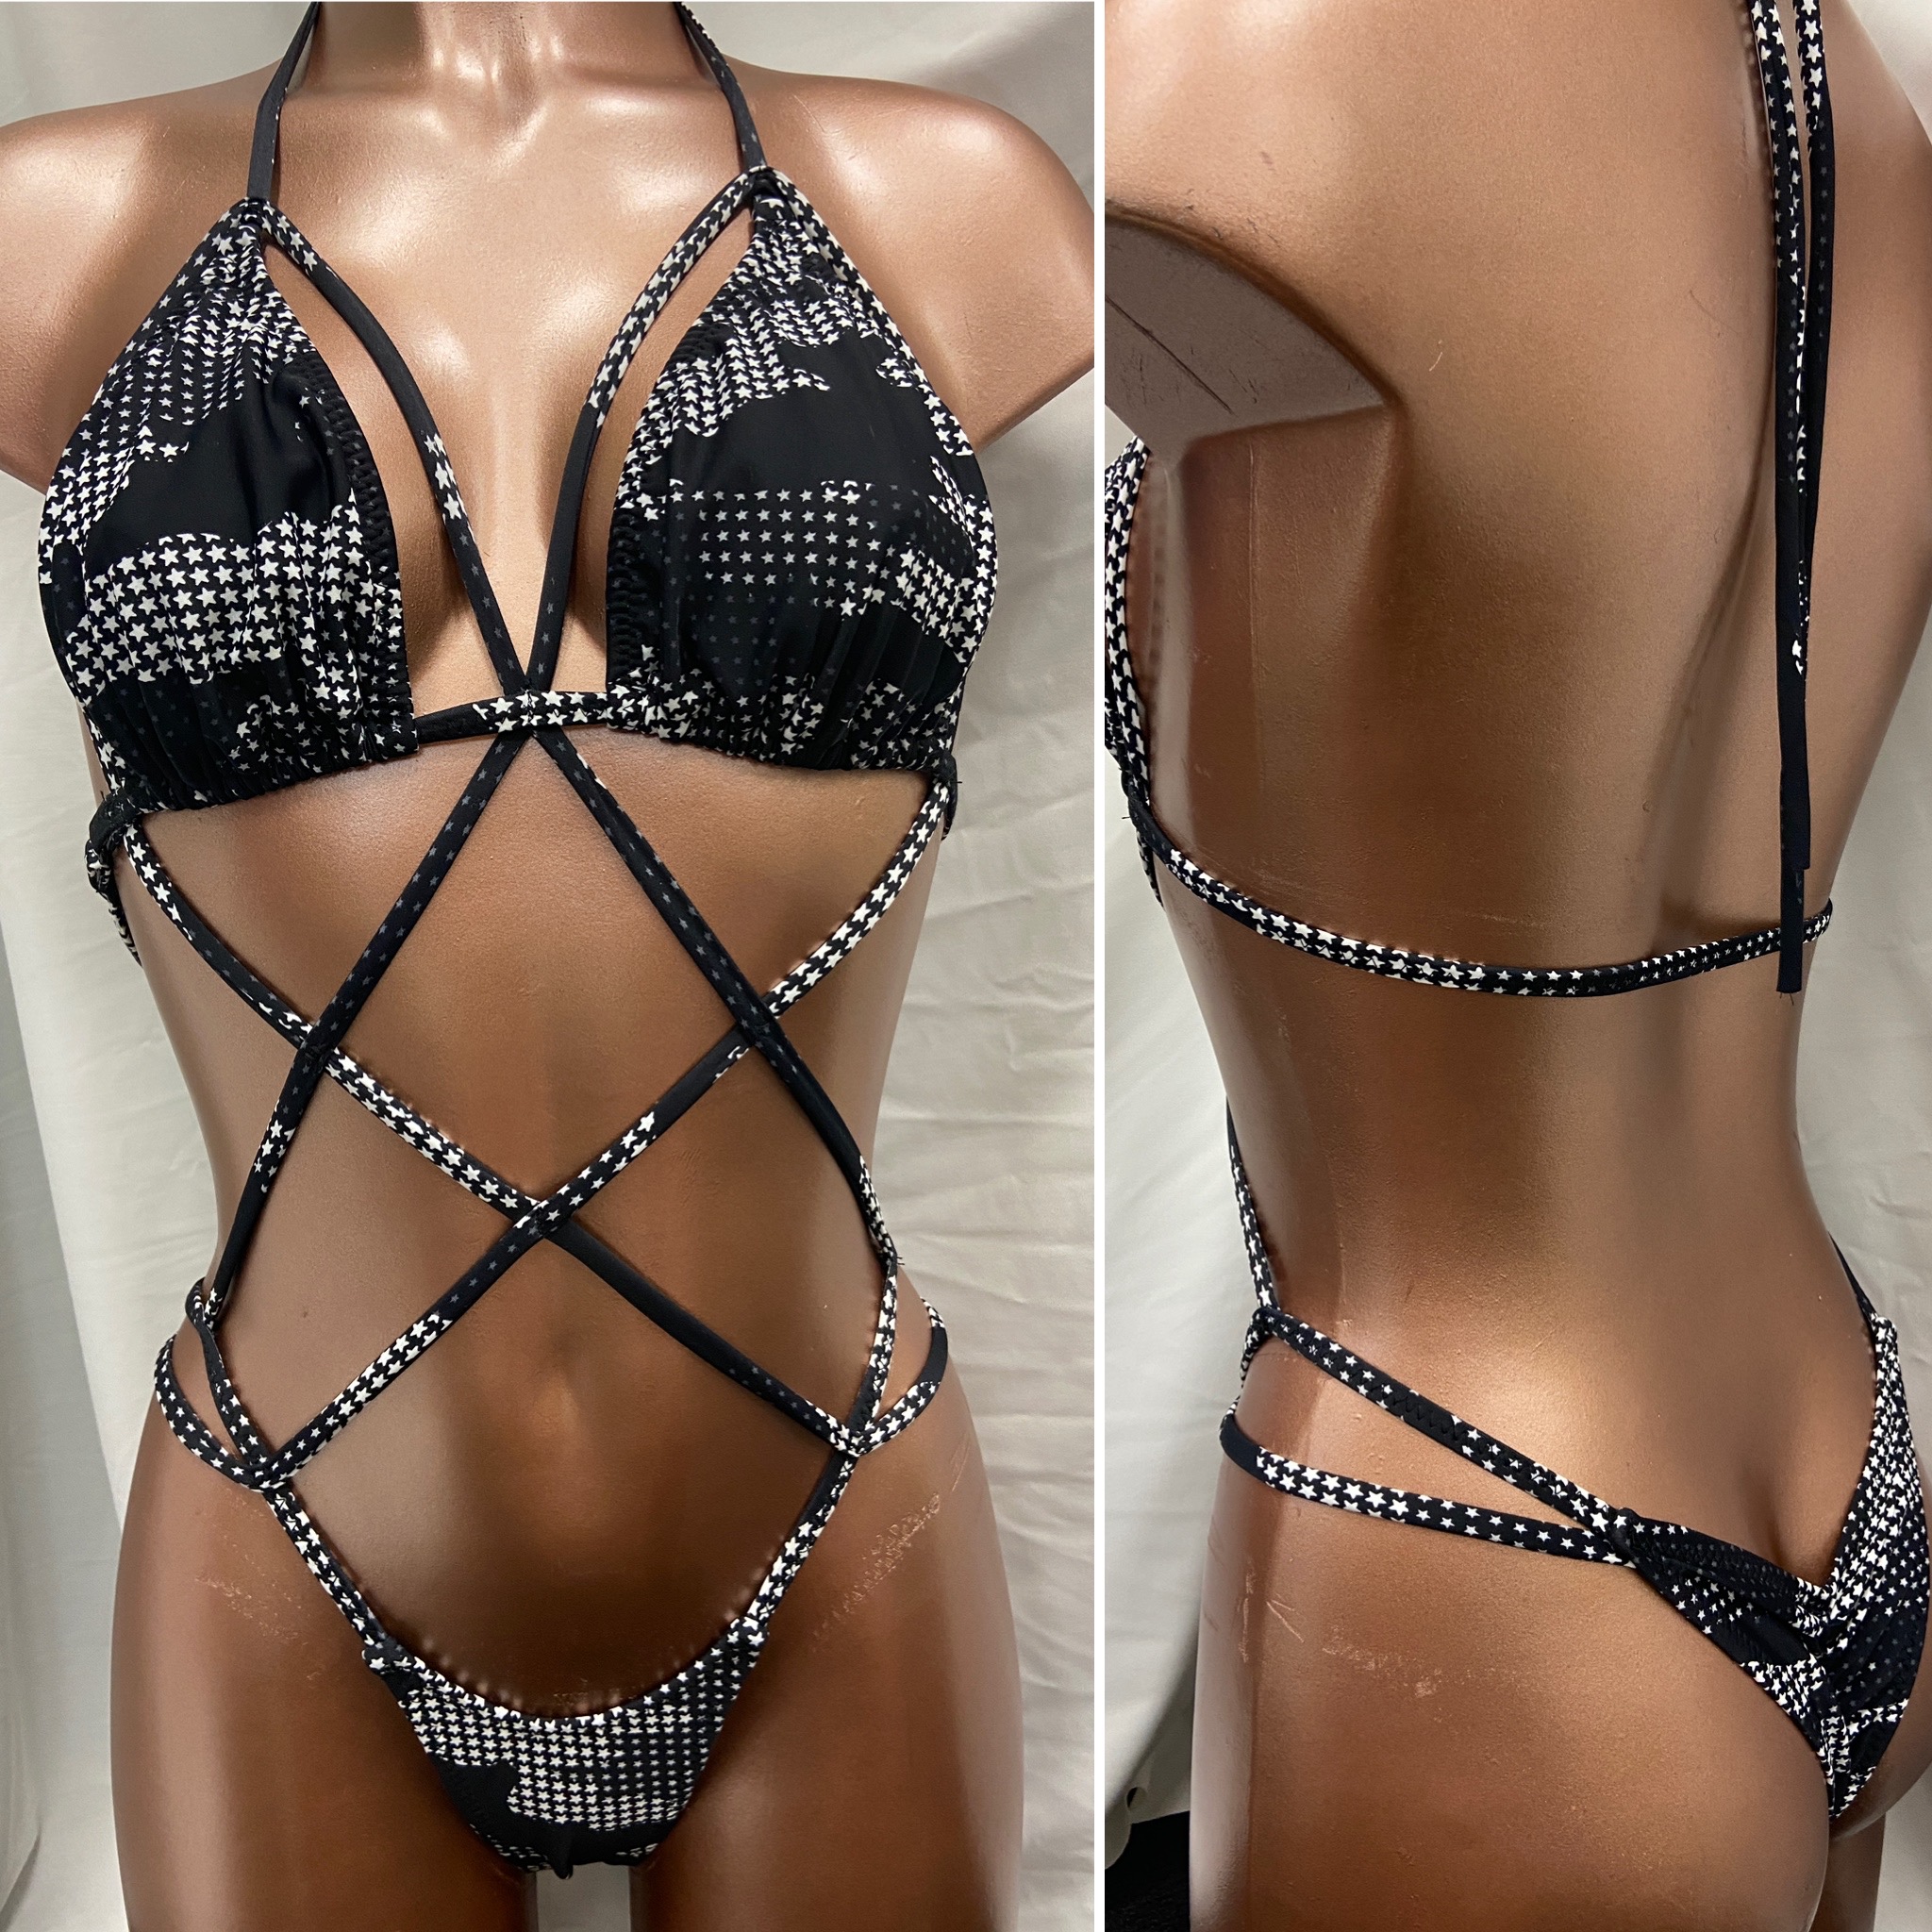 3.
String bikini 
Black camo 
$70